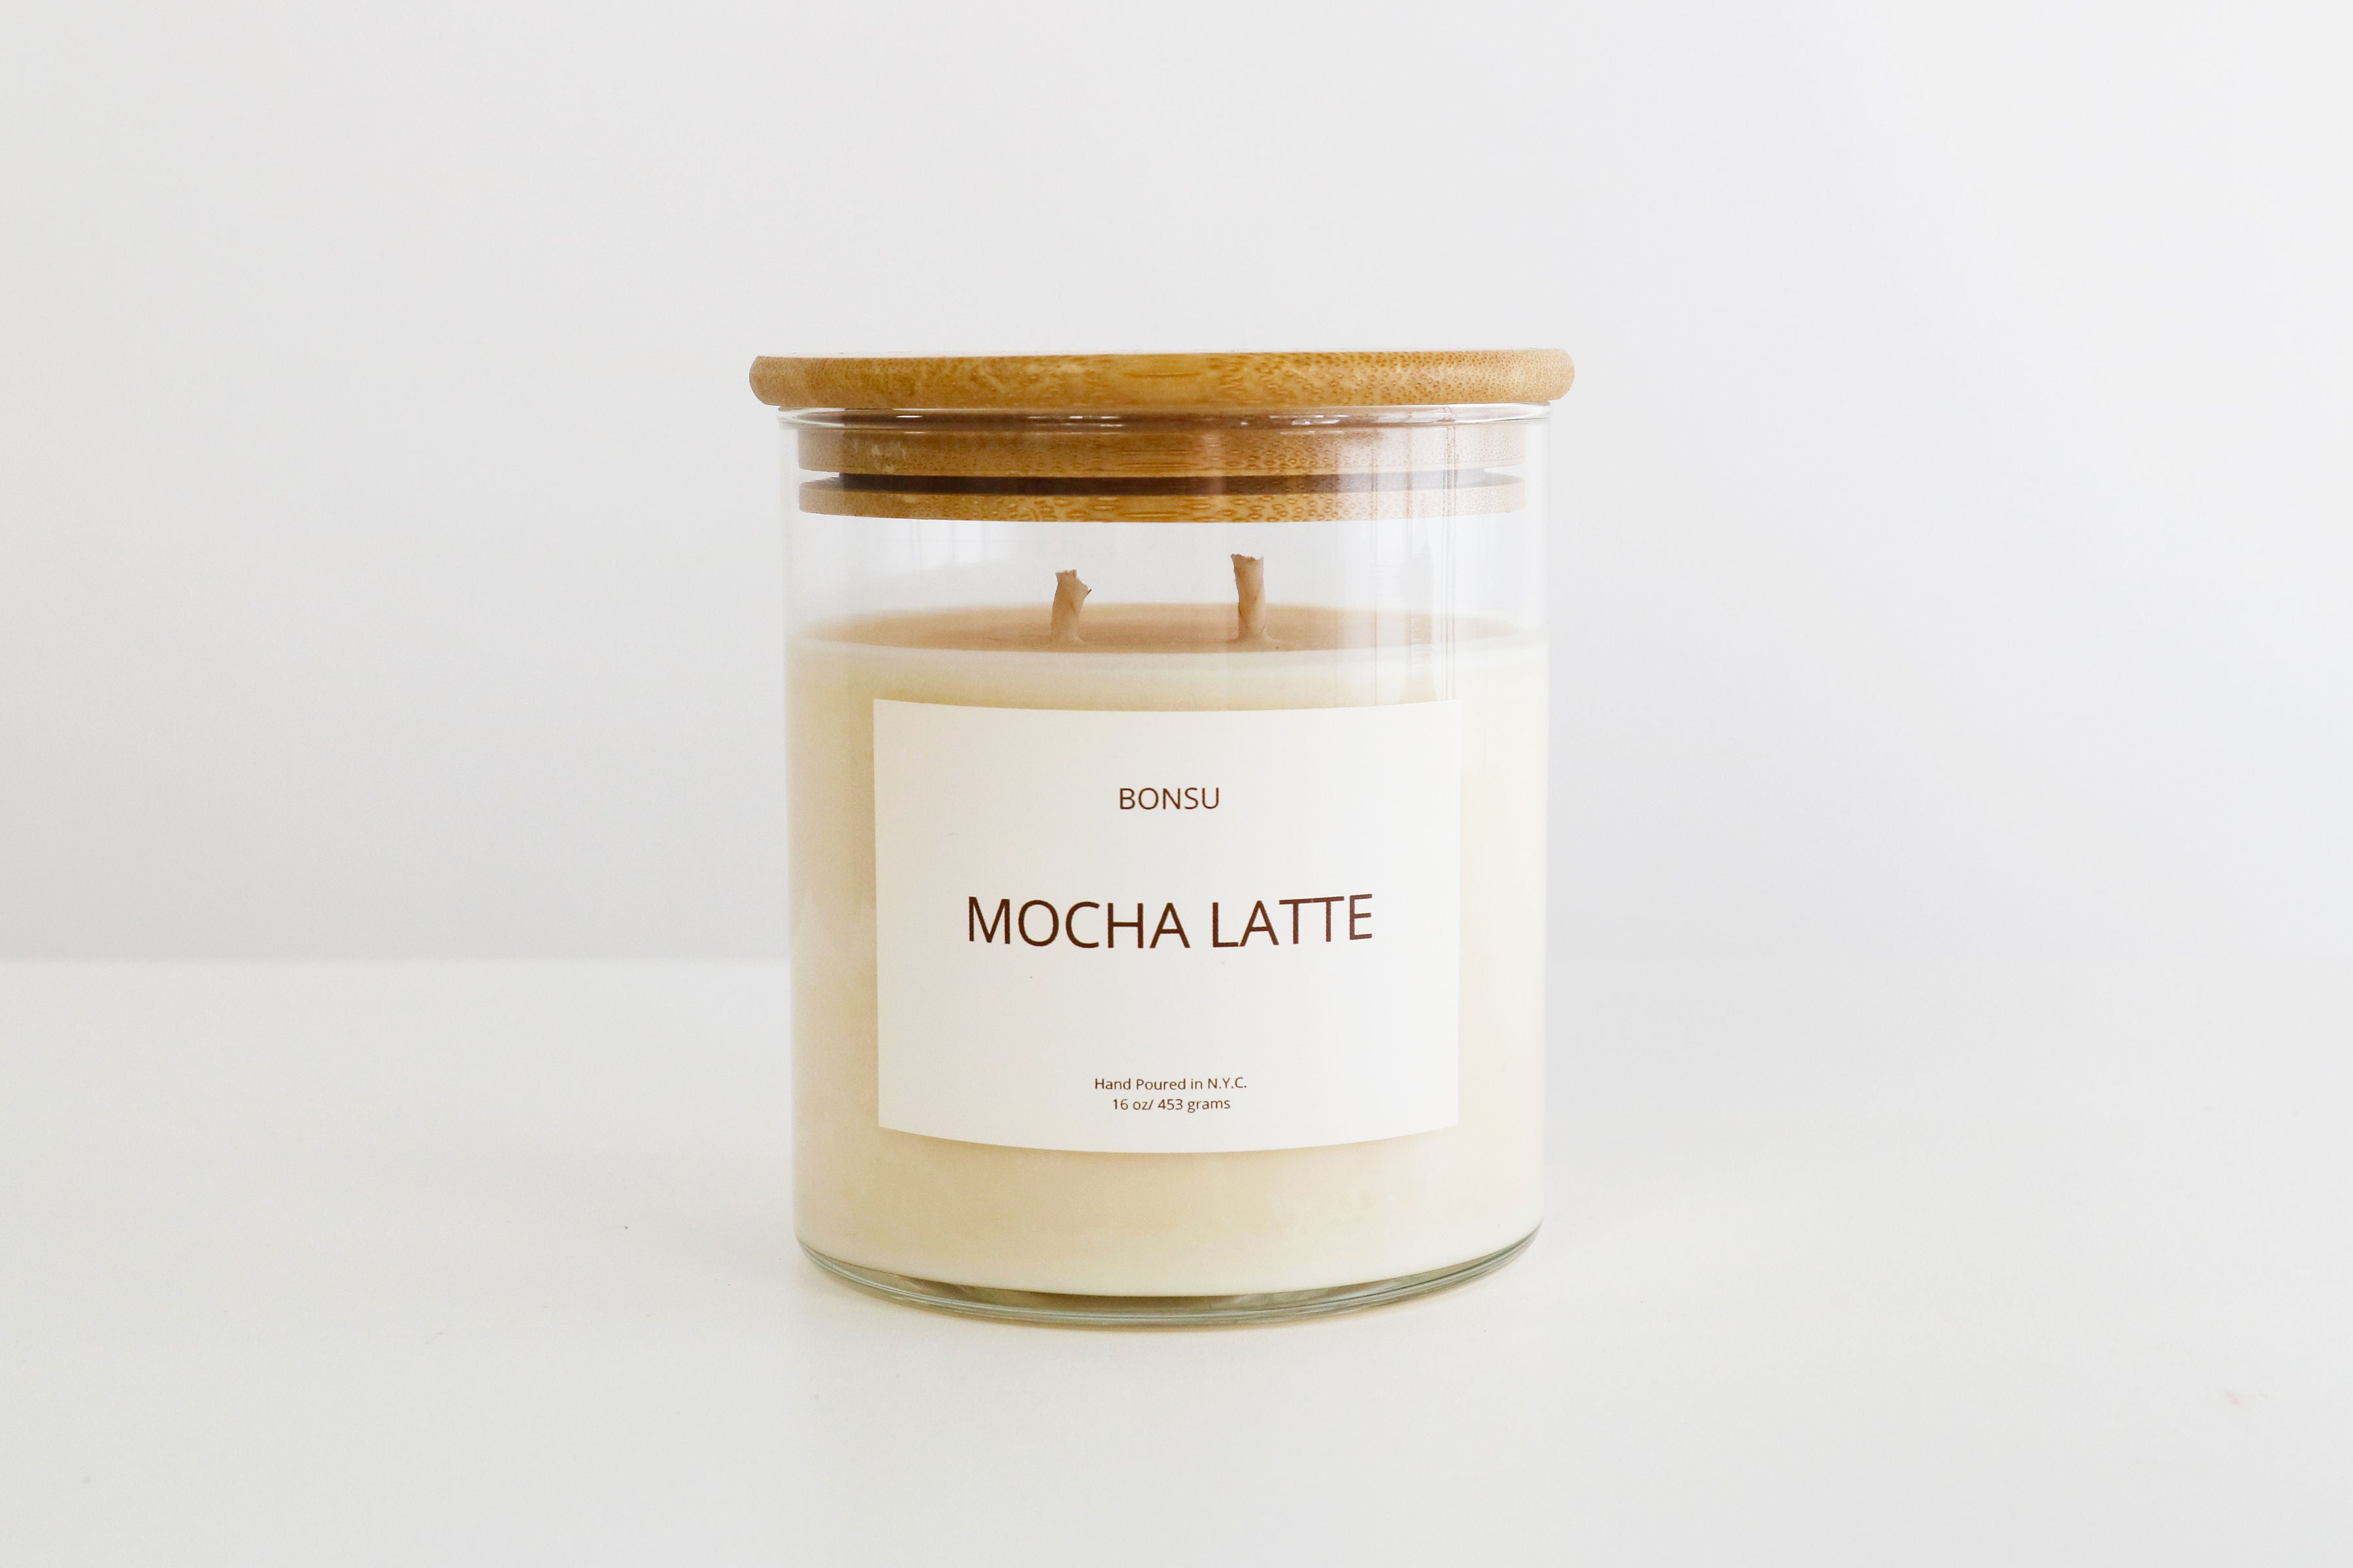 Mocha Mint Capuchino 6 oz Coffee Cup - Soy Candle